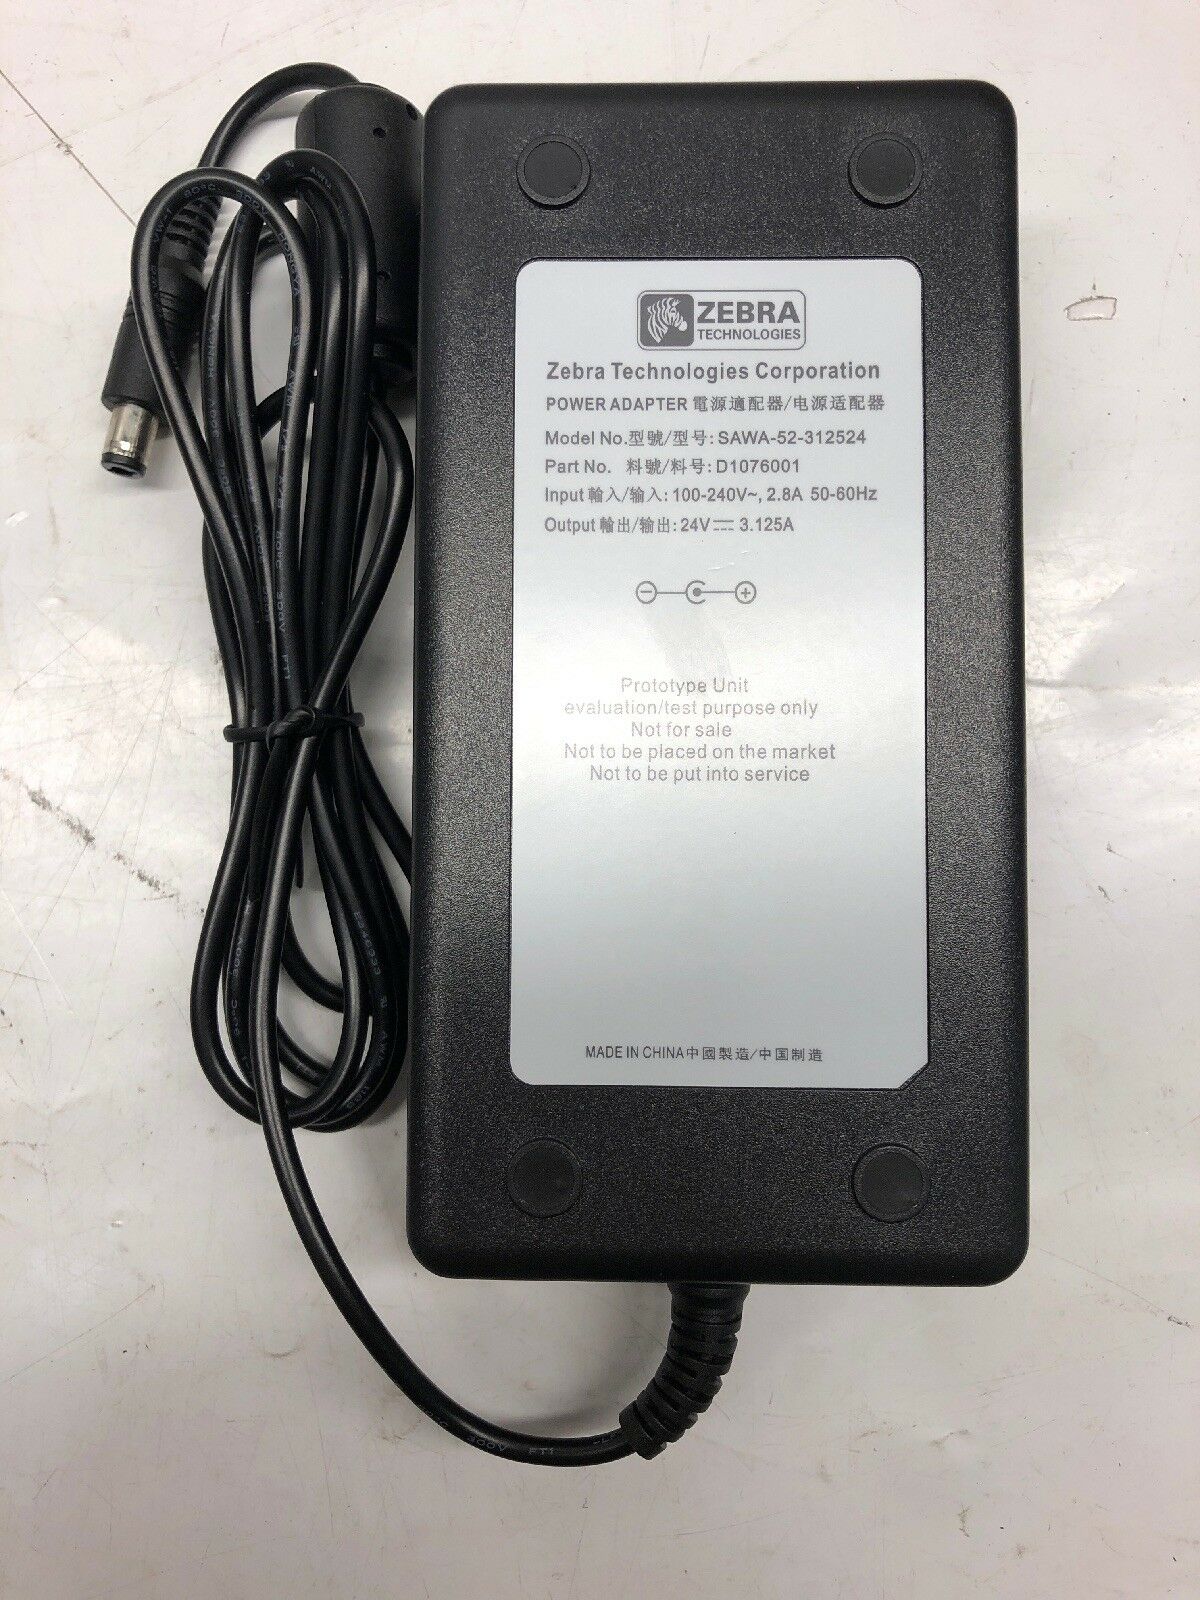 Zebra Thermal Printer Power Supply Adapter SAWA-52-312524 (output 24V-3.125A) Compatible Brand: For Zebra Compatib - Click Image to Close